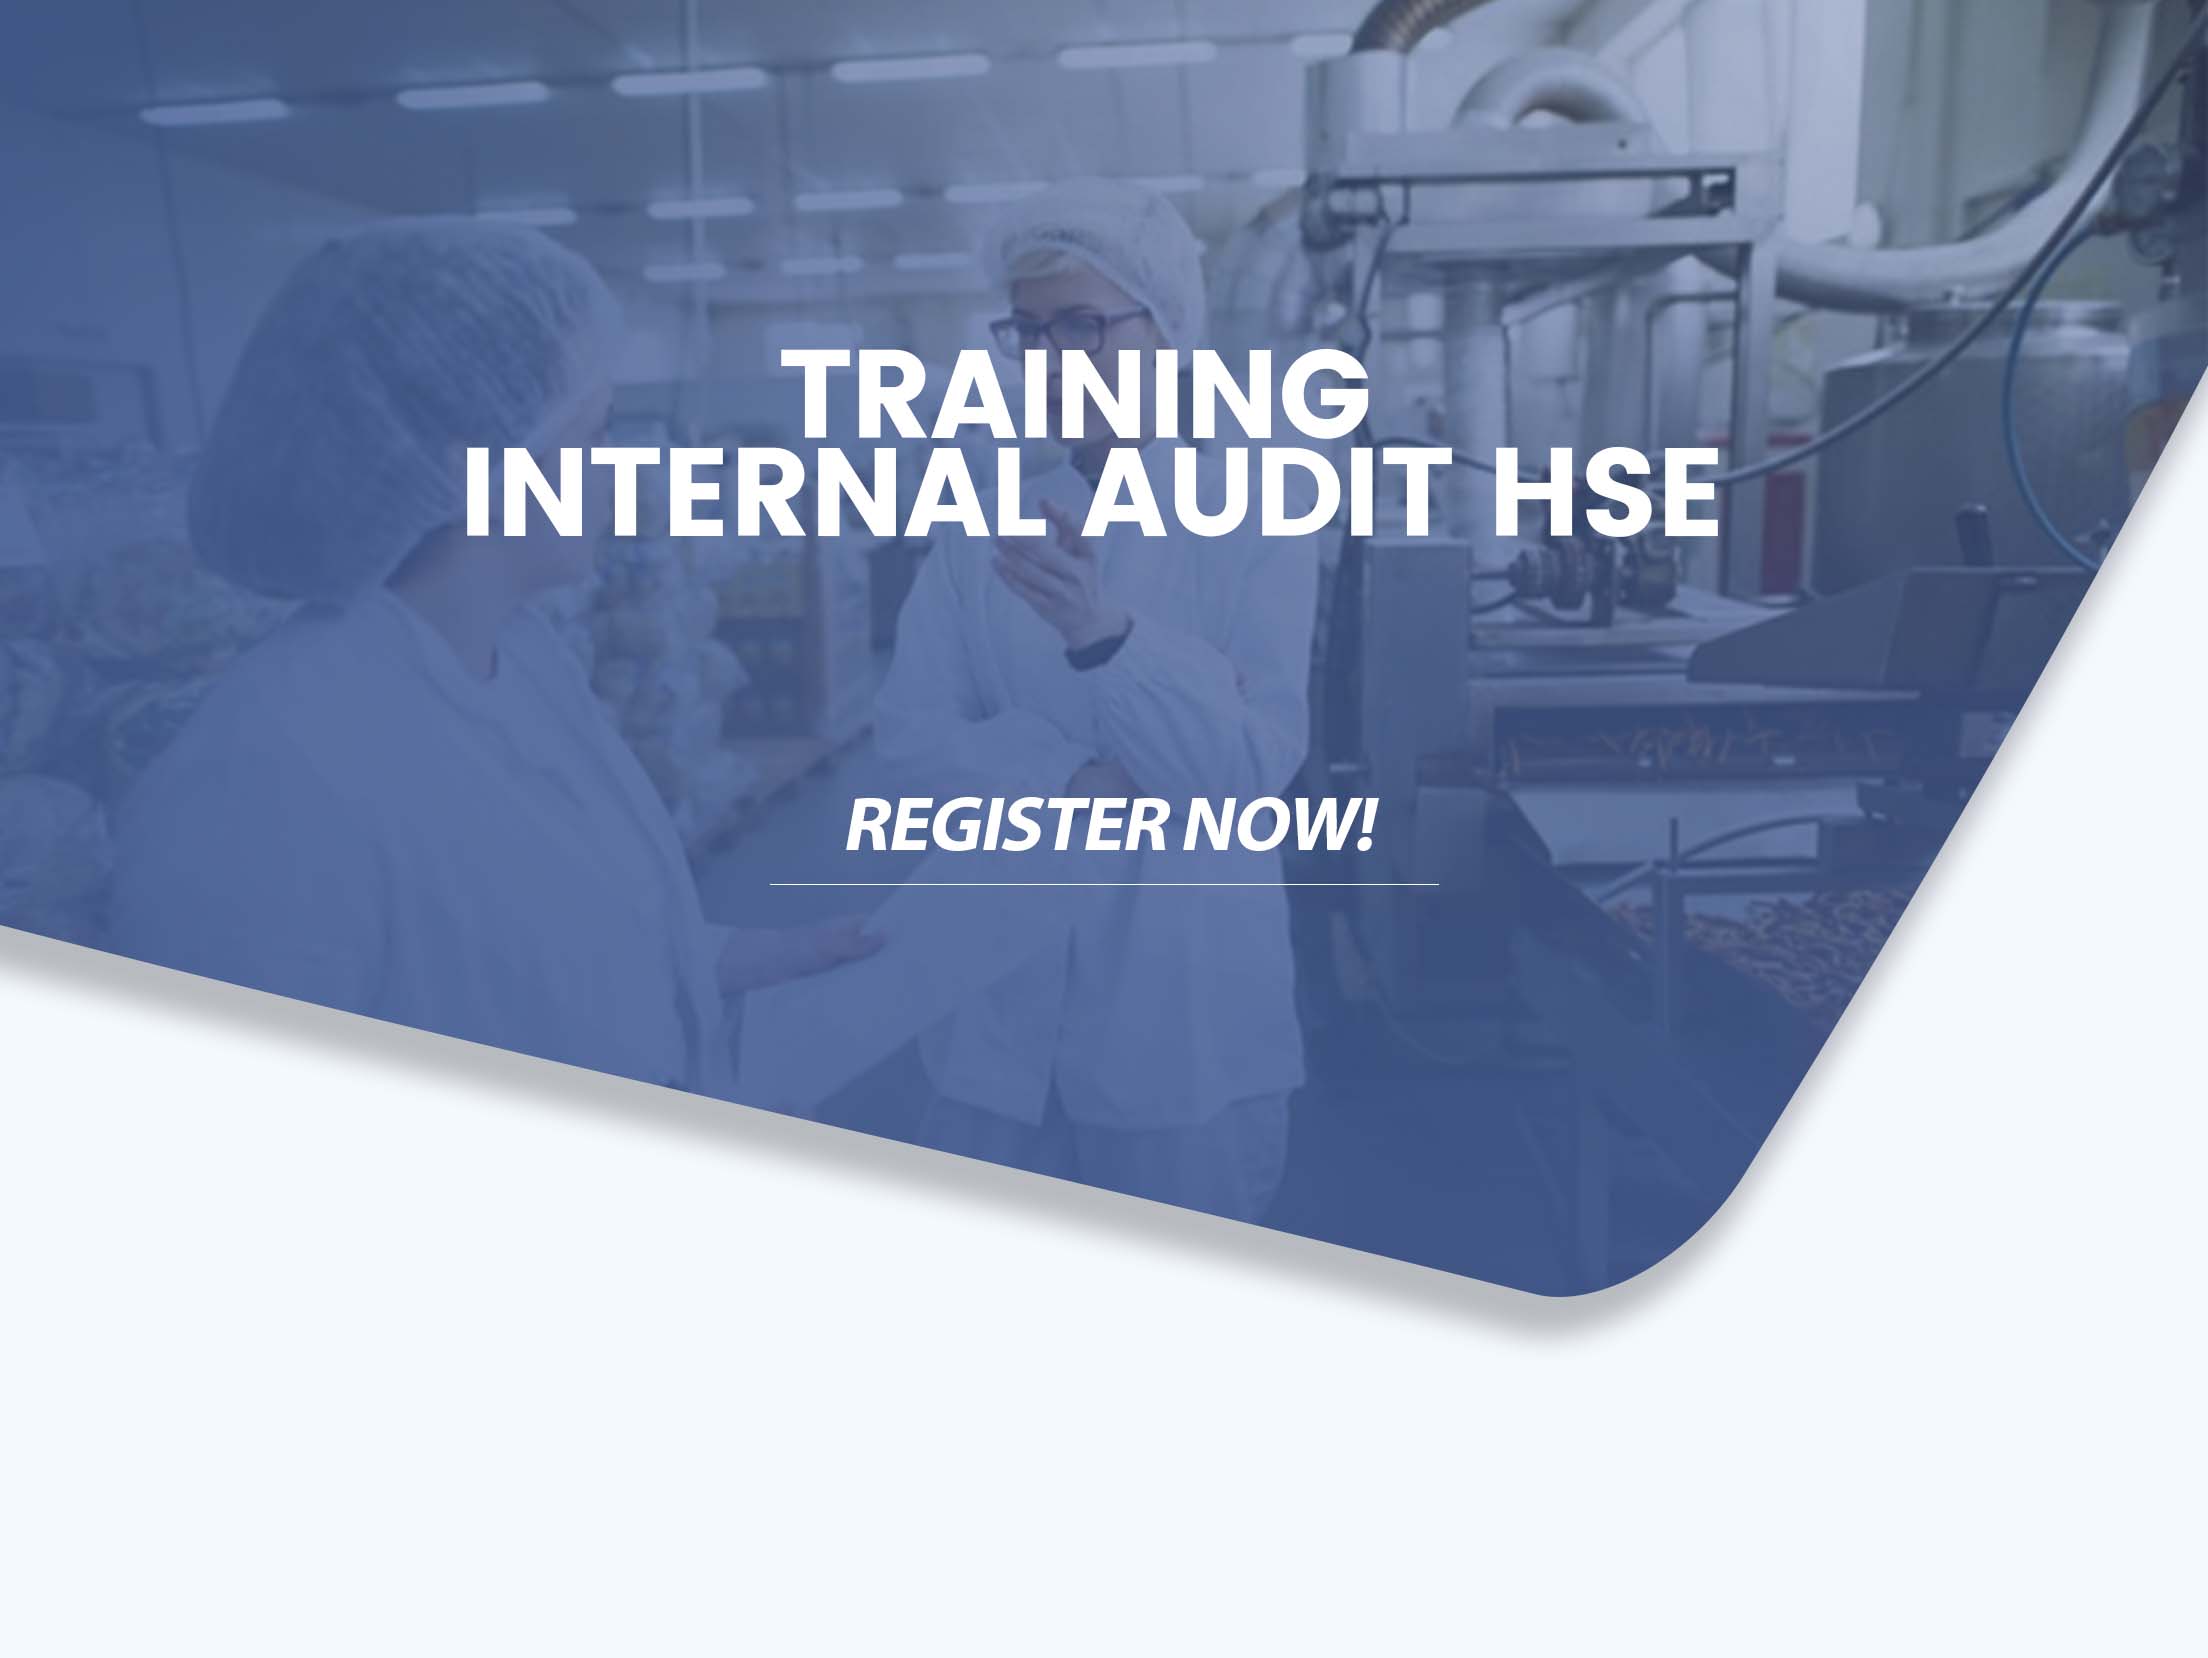 Training Internal Audit HSE